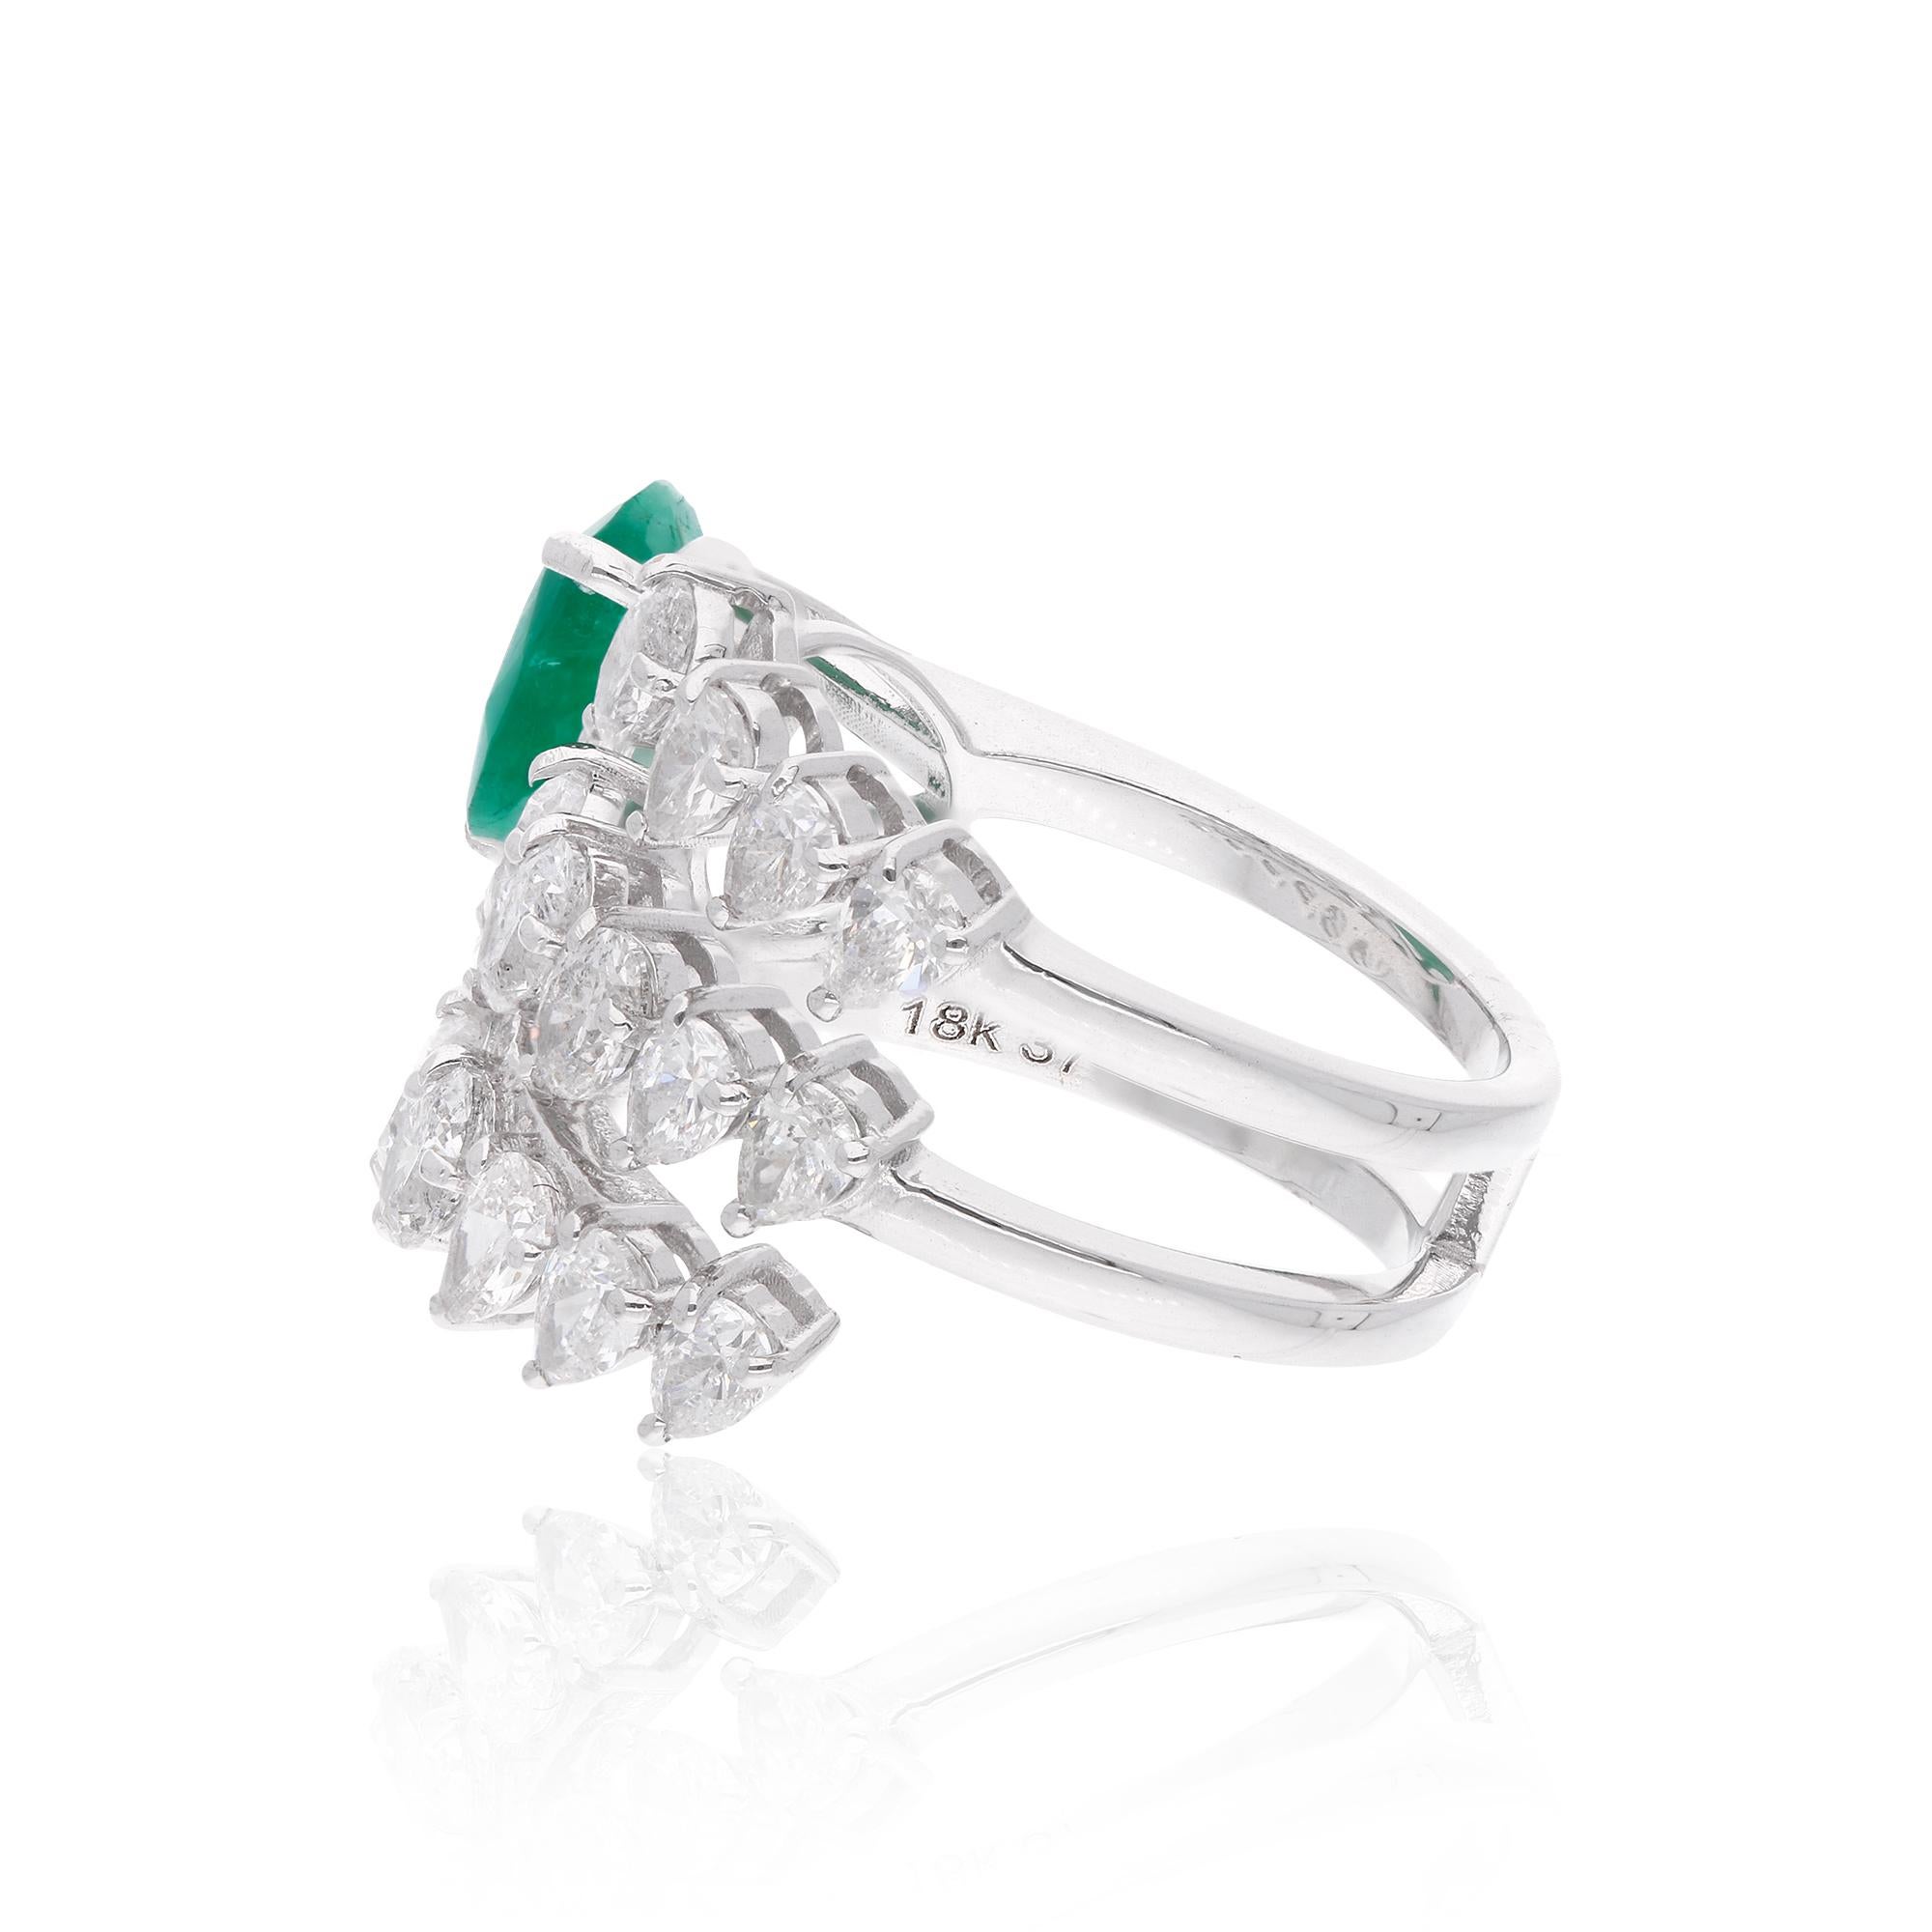 For Sale:  Zambian Emerald Gemstone Spiral Ring Oval Diamond 18 Karat White Gold Jewelry 3